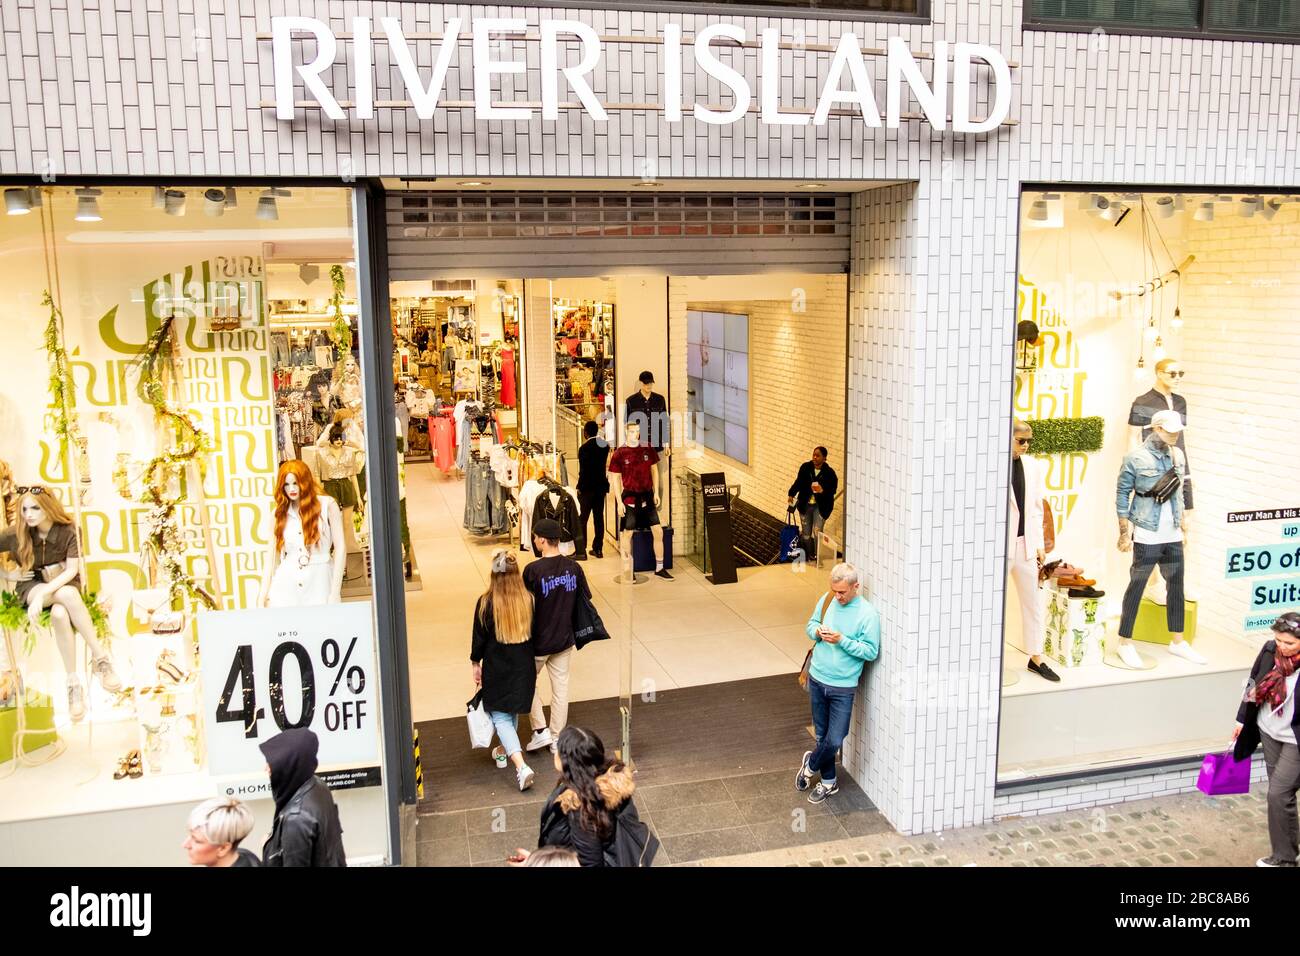 River Island- British high street fashion brand- exterior logo / signage- London Stock Photo